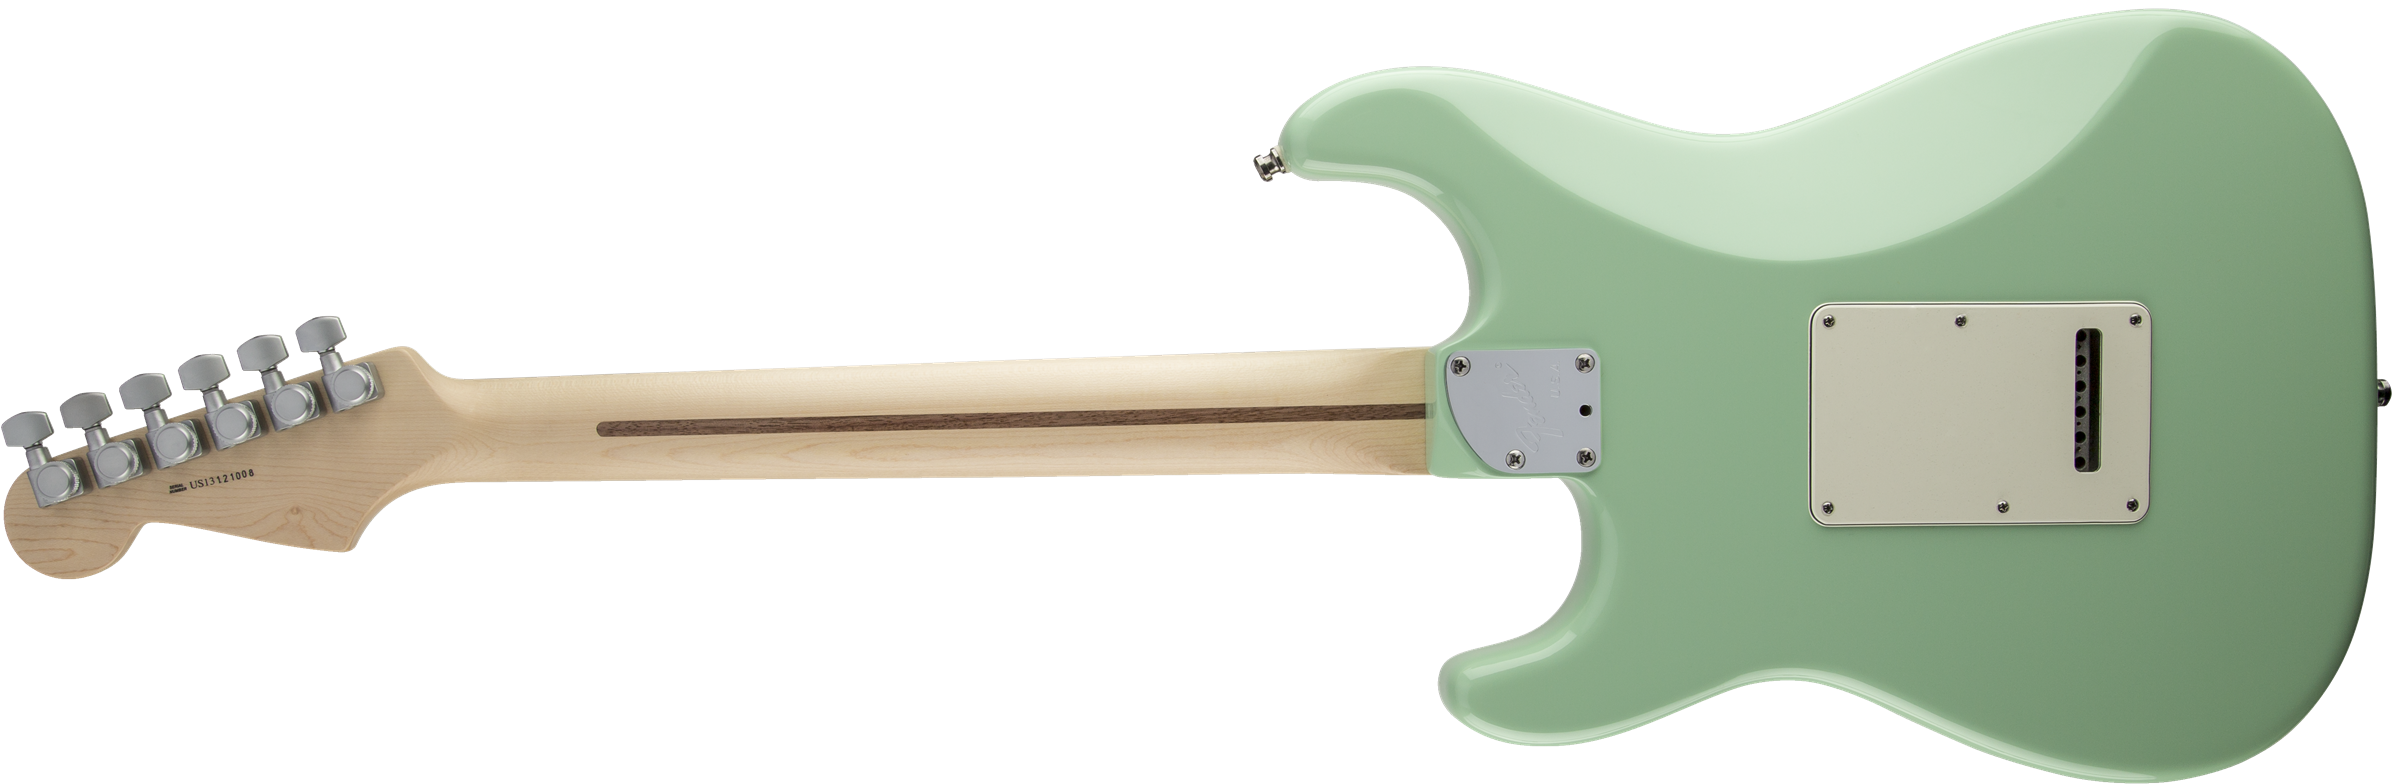 Fender Stratocaster Jeff Beck - Surf Green - Guitarra eléctrica con forma de str. - Variation 1